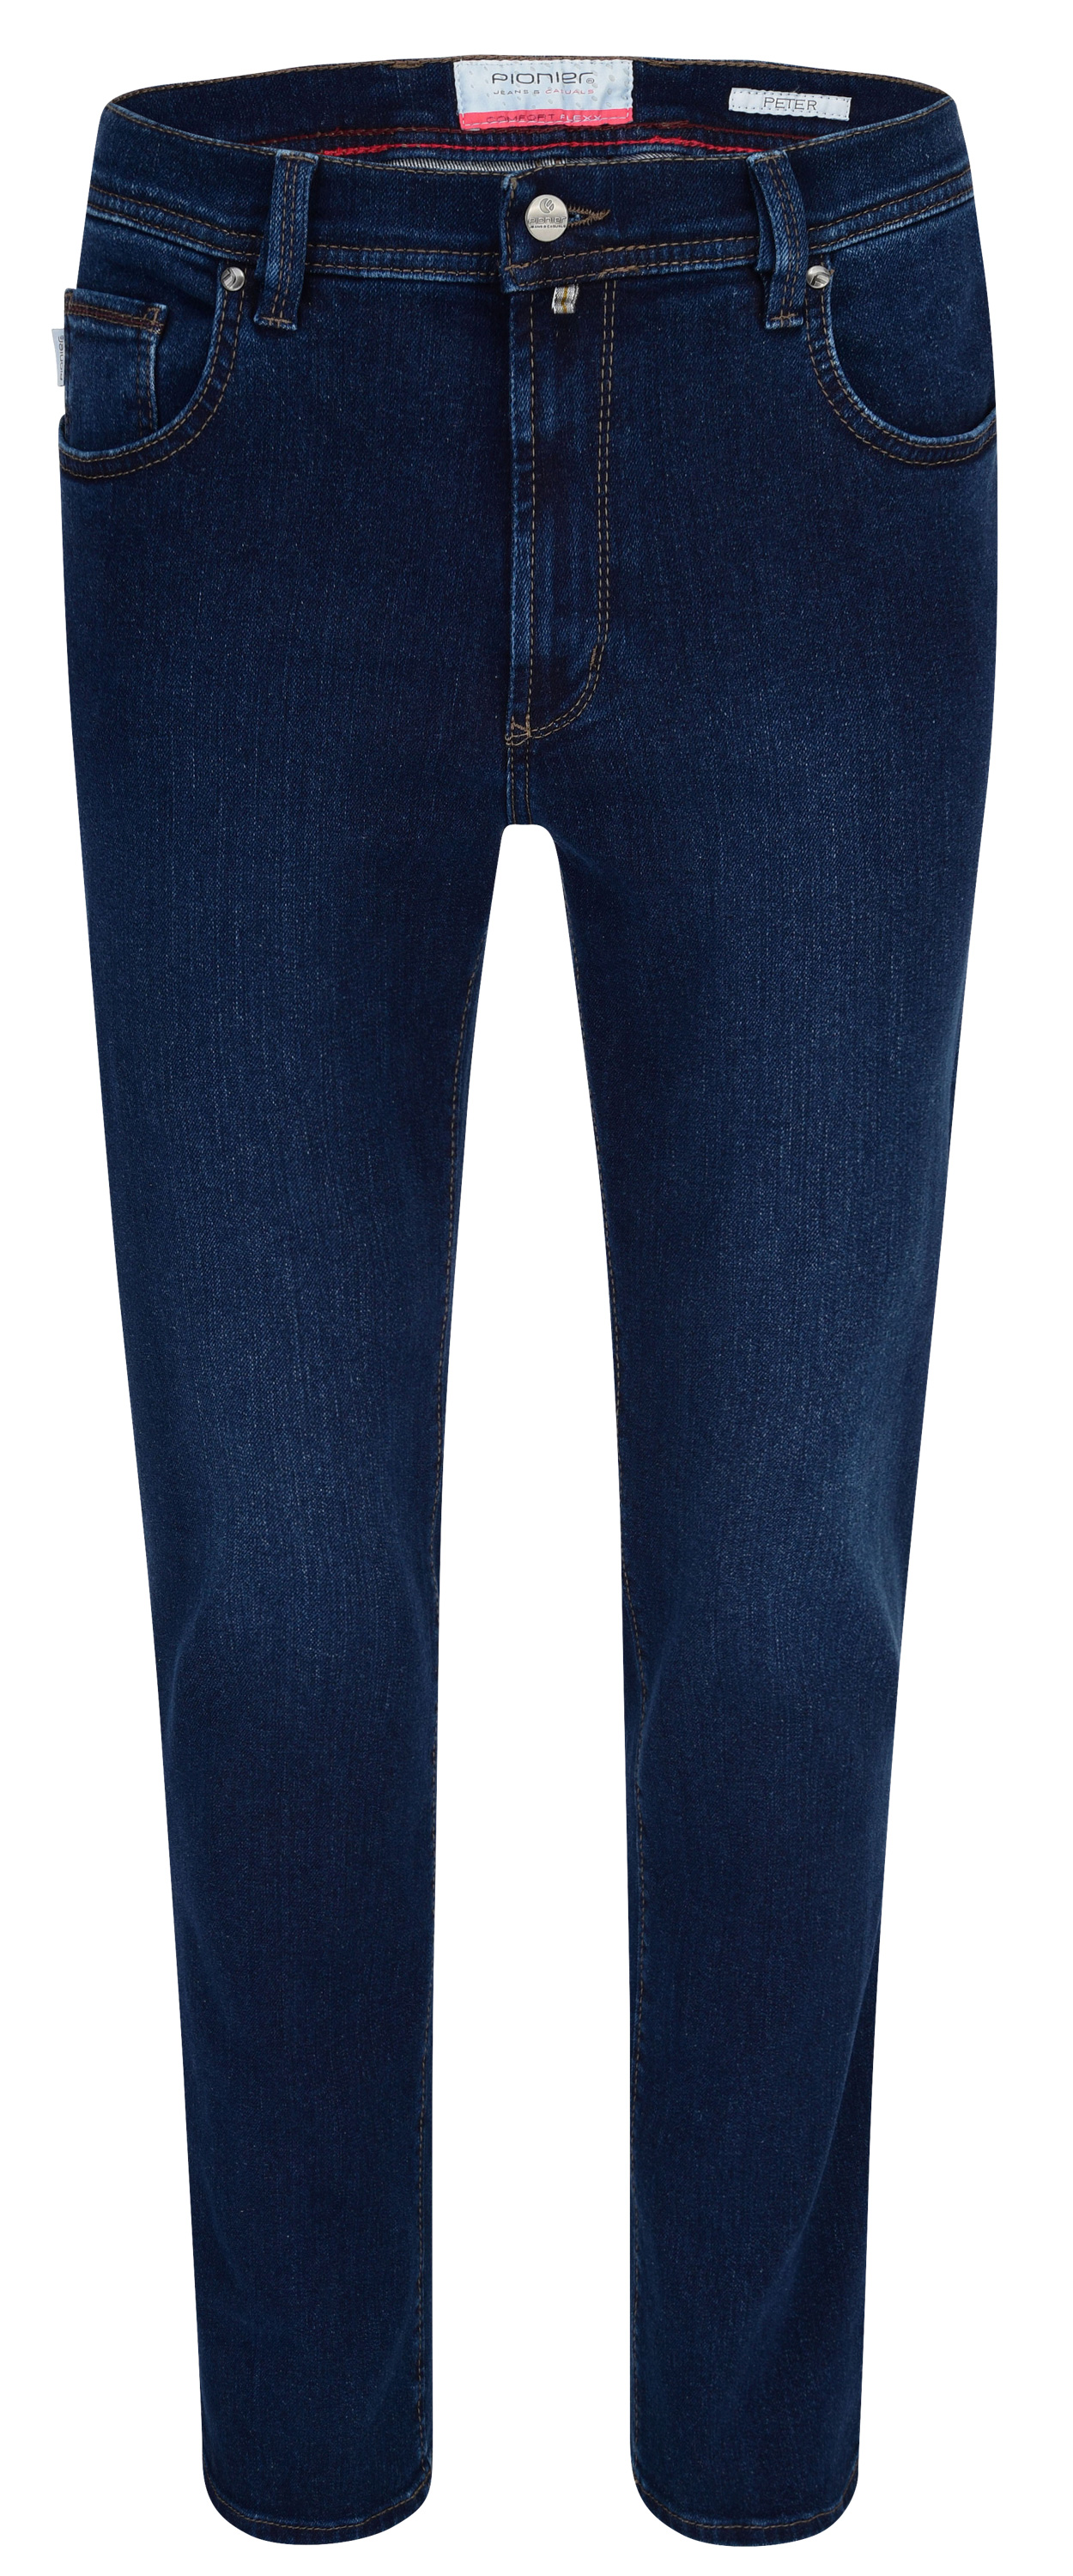 pionier jeans & casuals peter